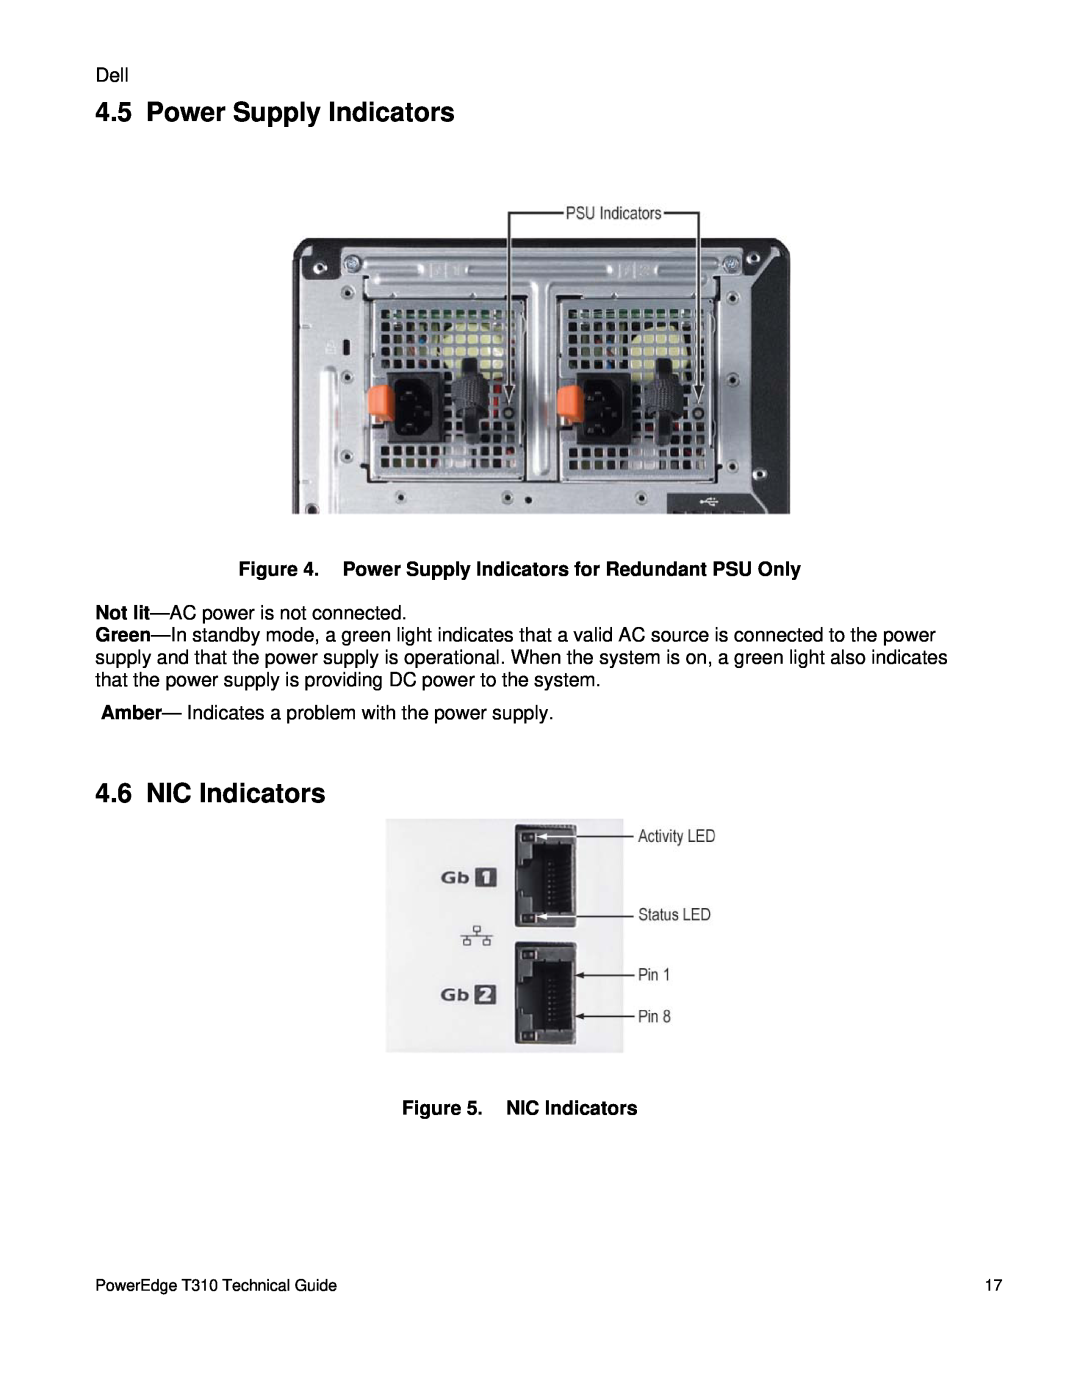 Dell T310 manual NIC Indicators, Power Supply Indicators for Redundant PSU Only 